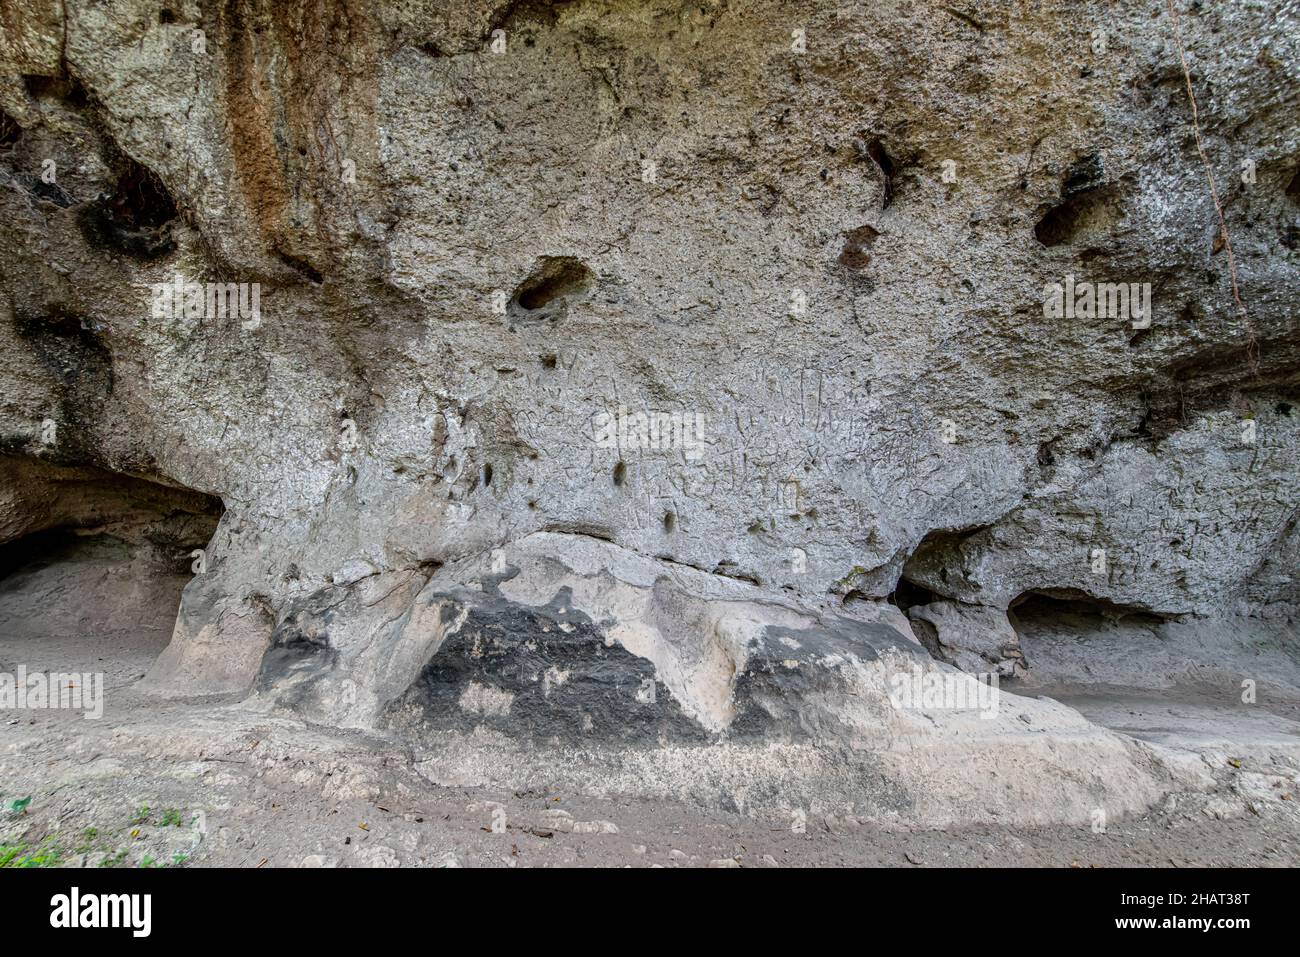 Angono Binangonan Petroglyphs Site Museum at Rizal Province, Philippines Stock Photo